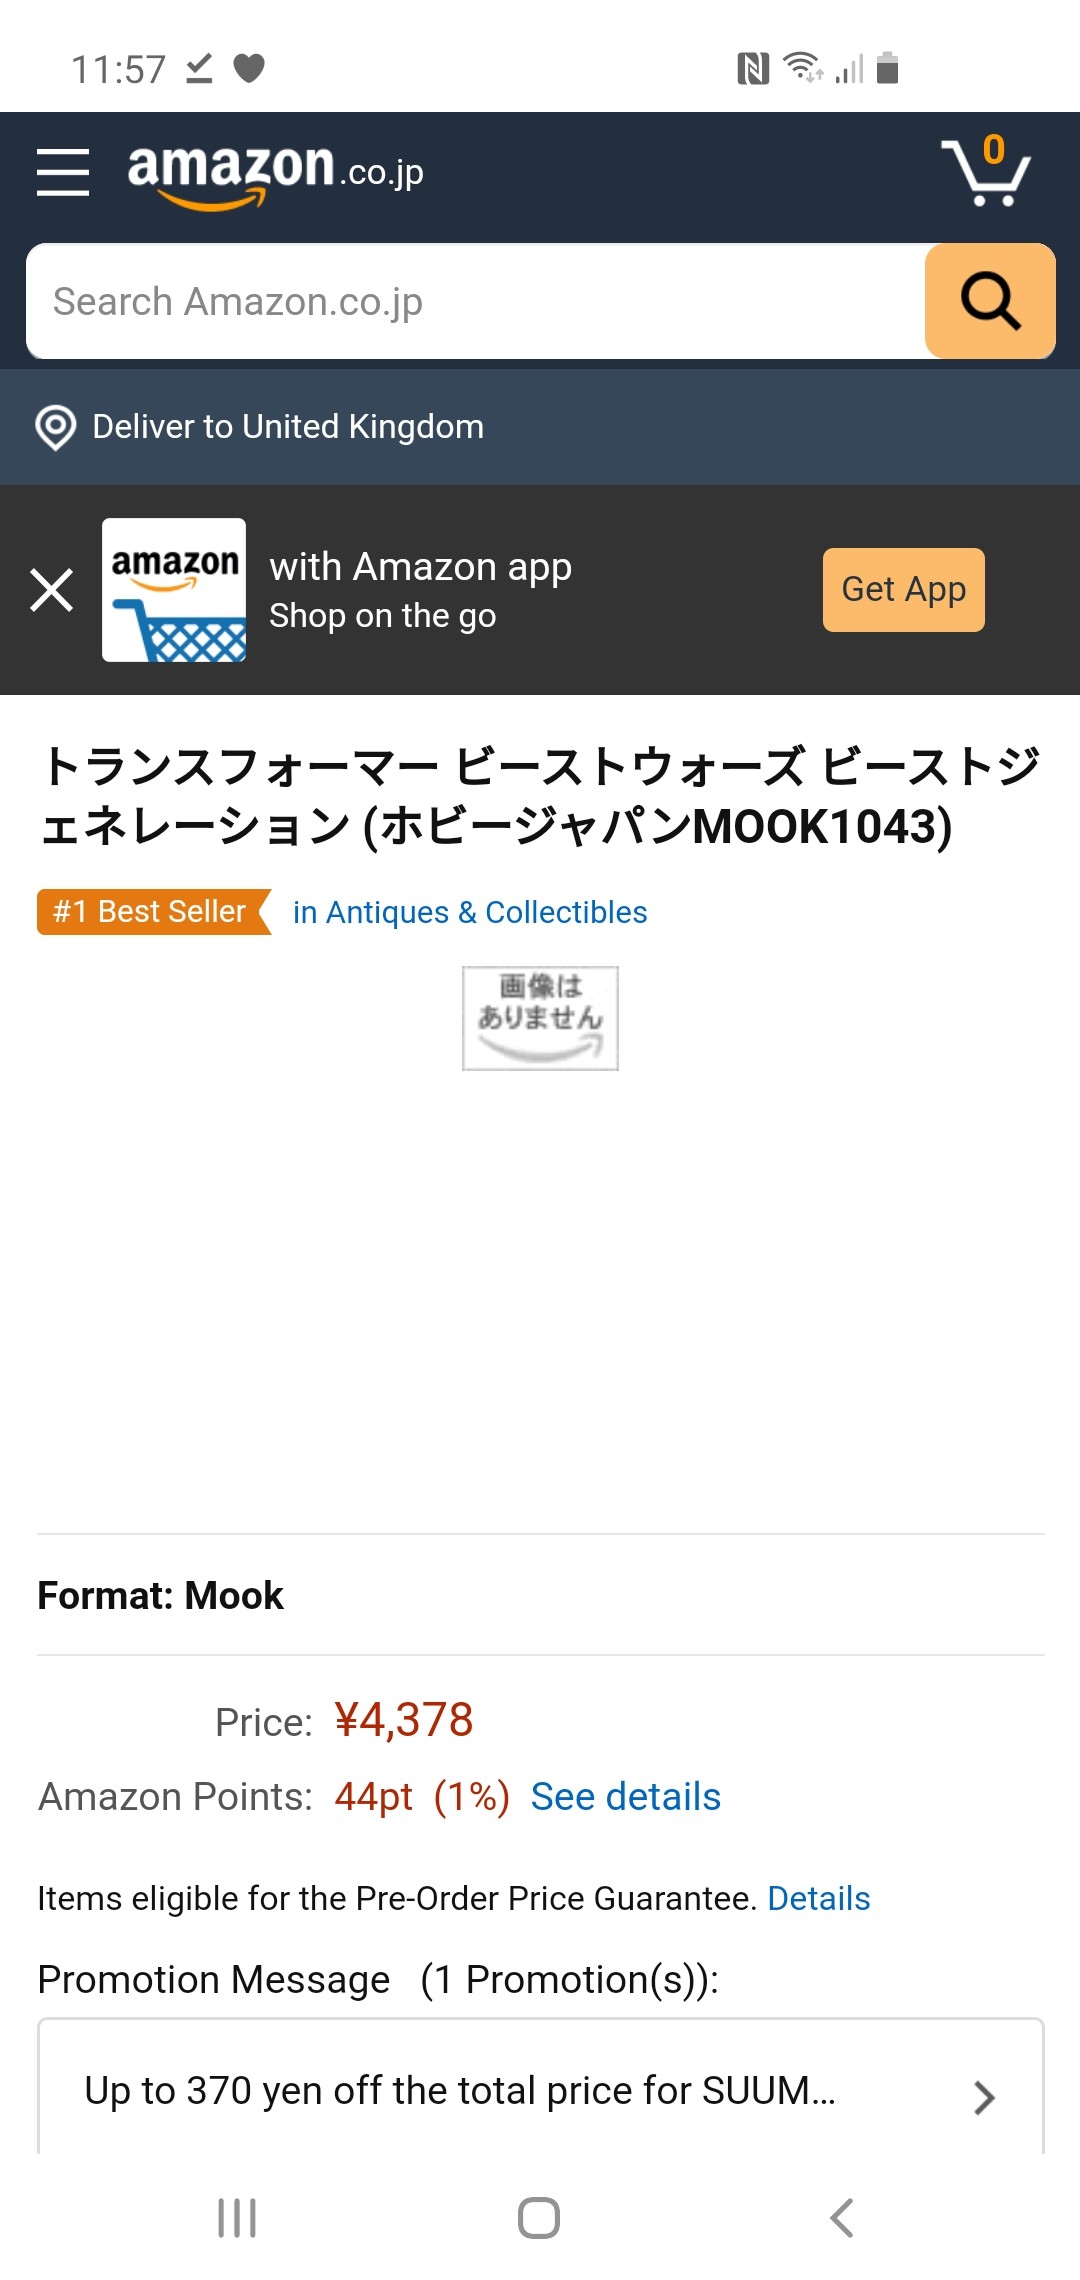 RARE Supreme Mook Vol.3 Book magazine used item from Japan